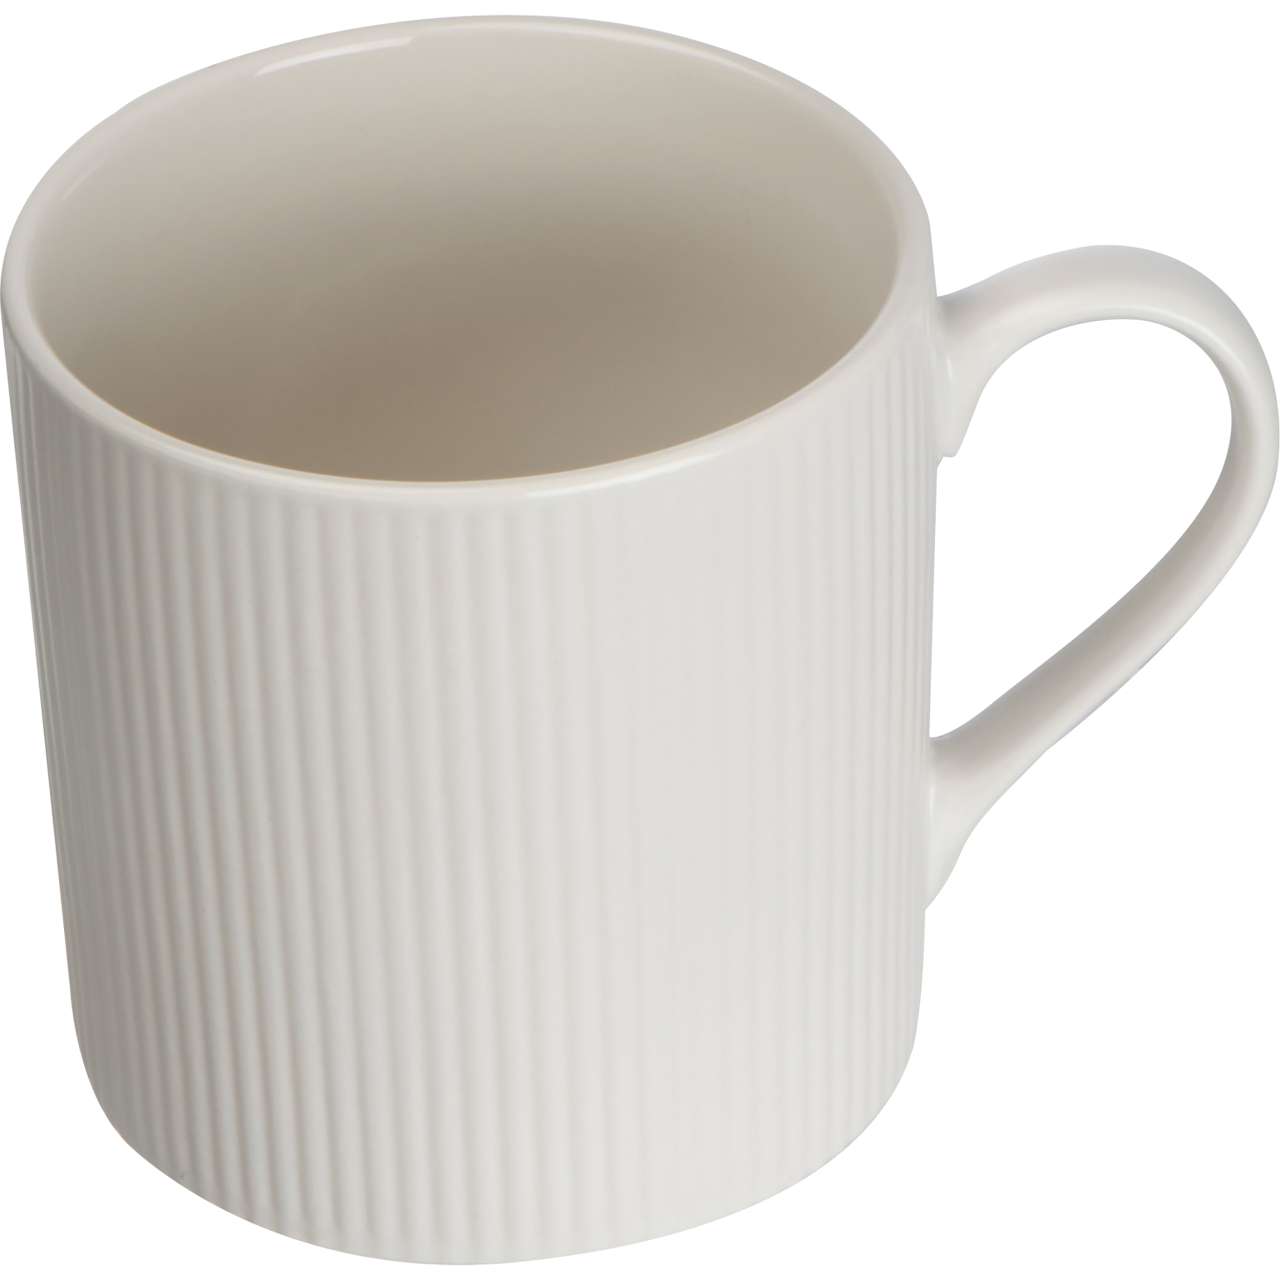 Tasse aus Keramik